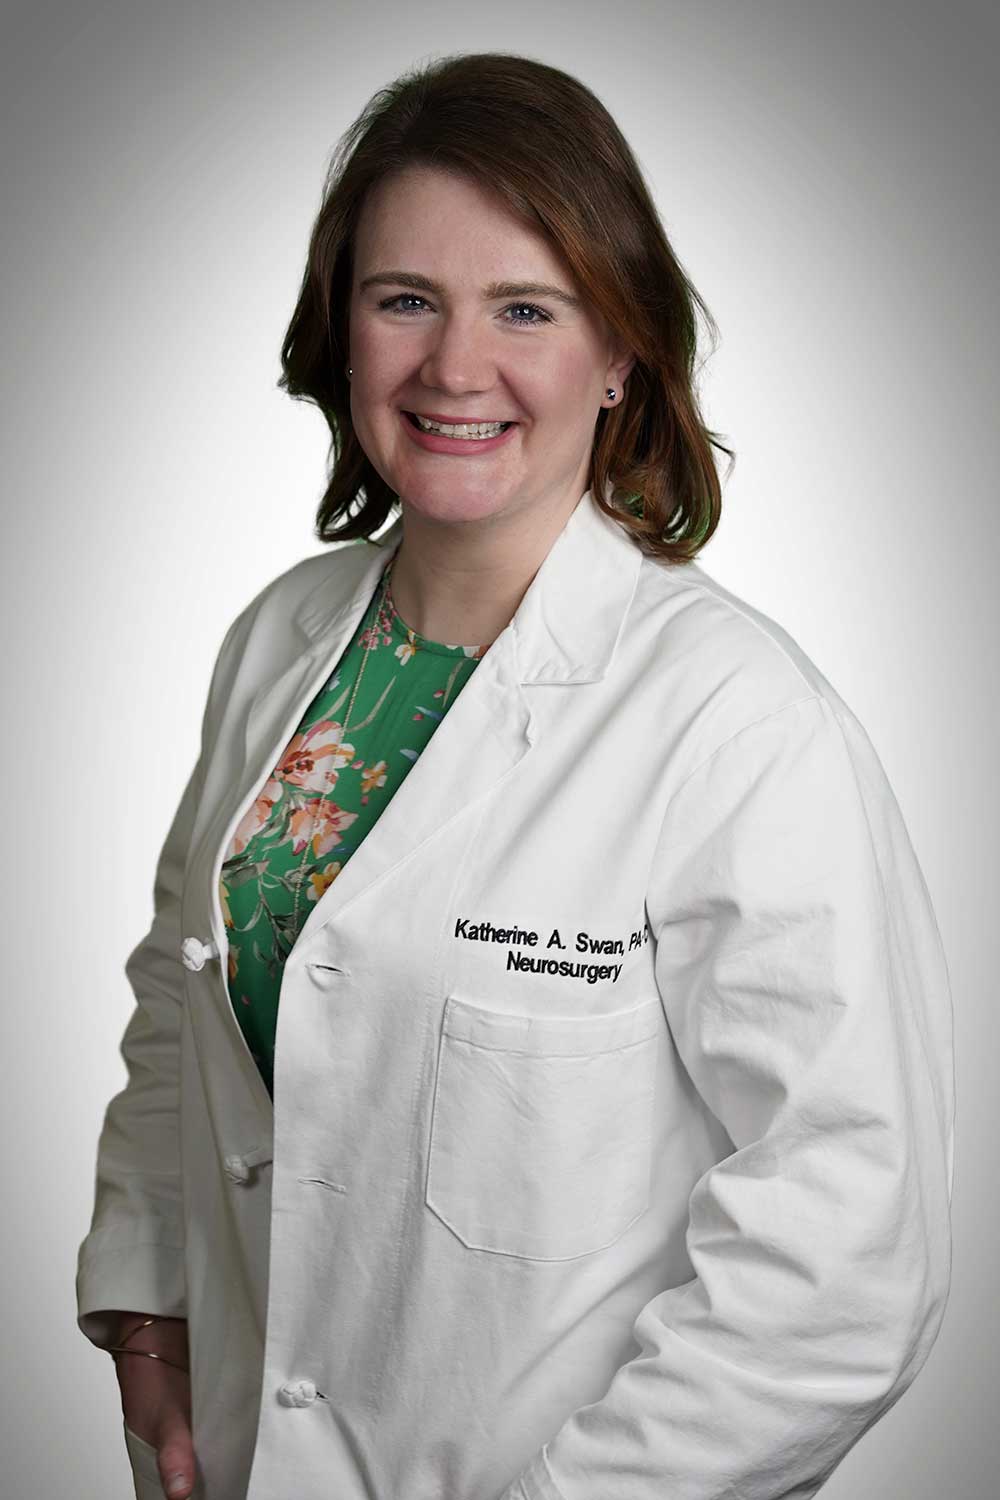 Headshot of PA Katherine Swan wearing her lab coat and smiling.